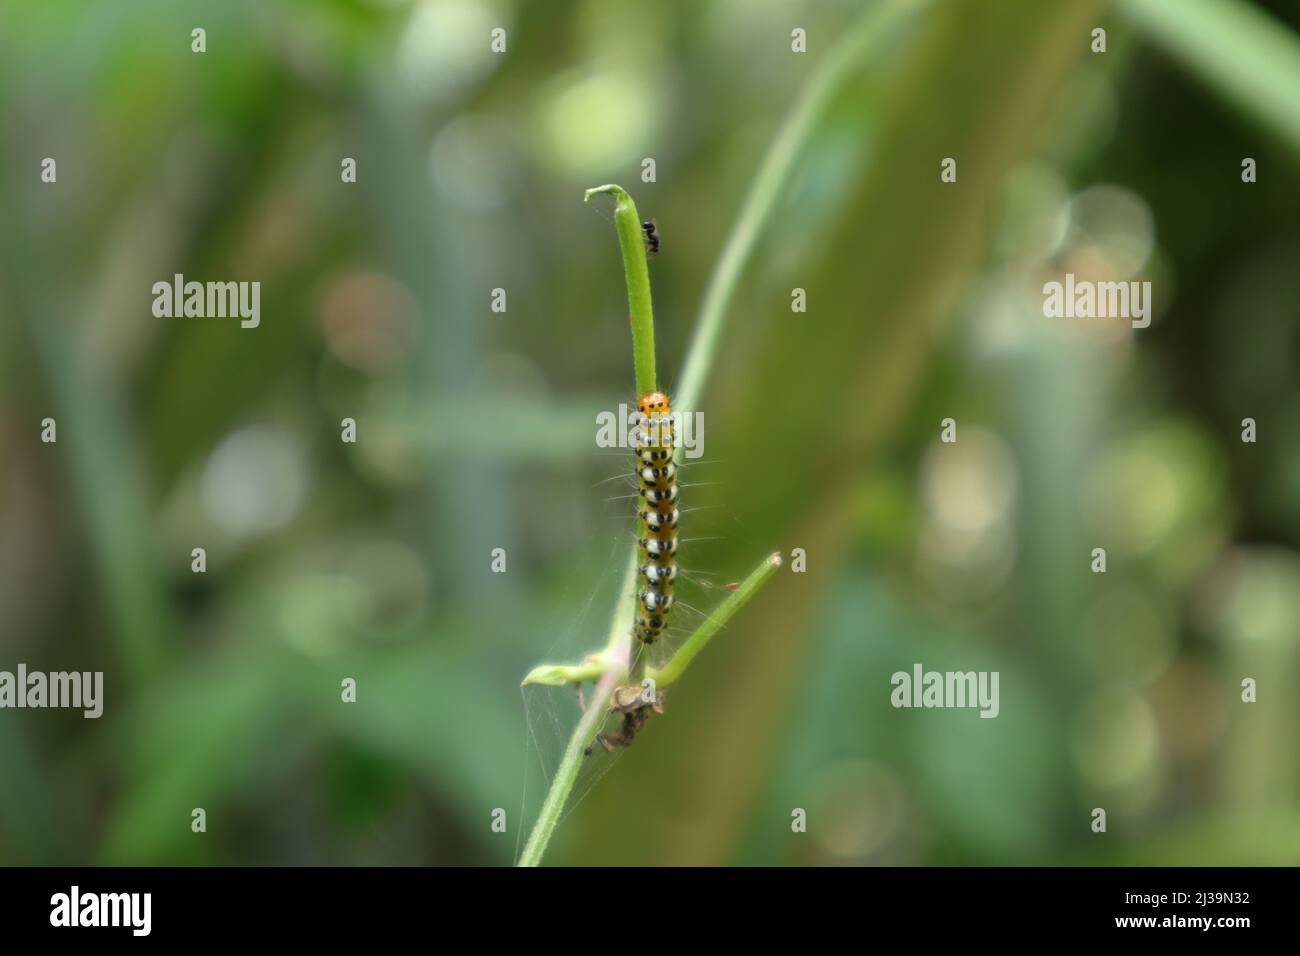 Black caterpillar long hair hi-res stock photography and images - Alamy